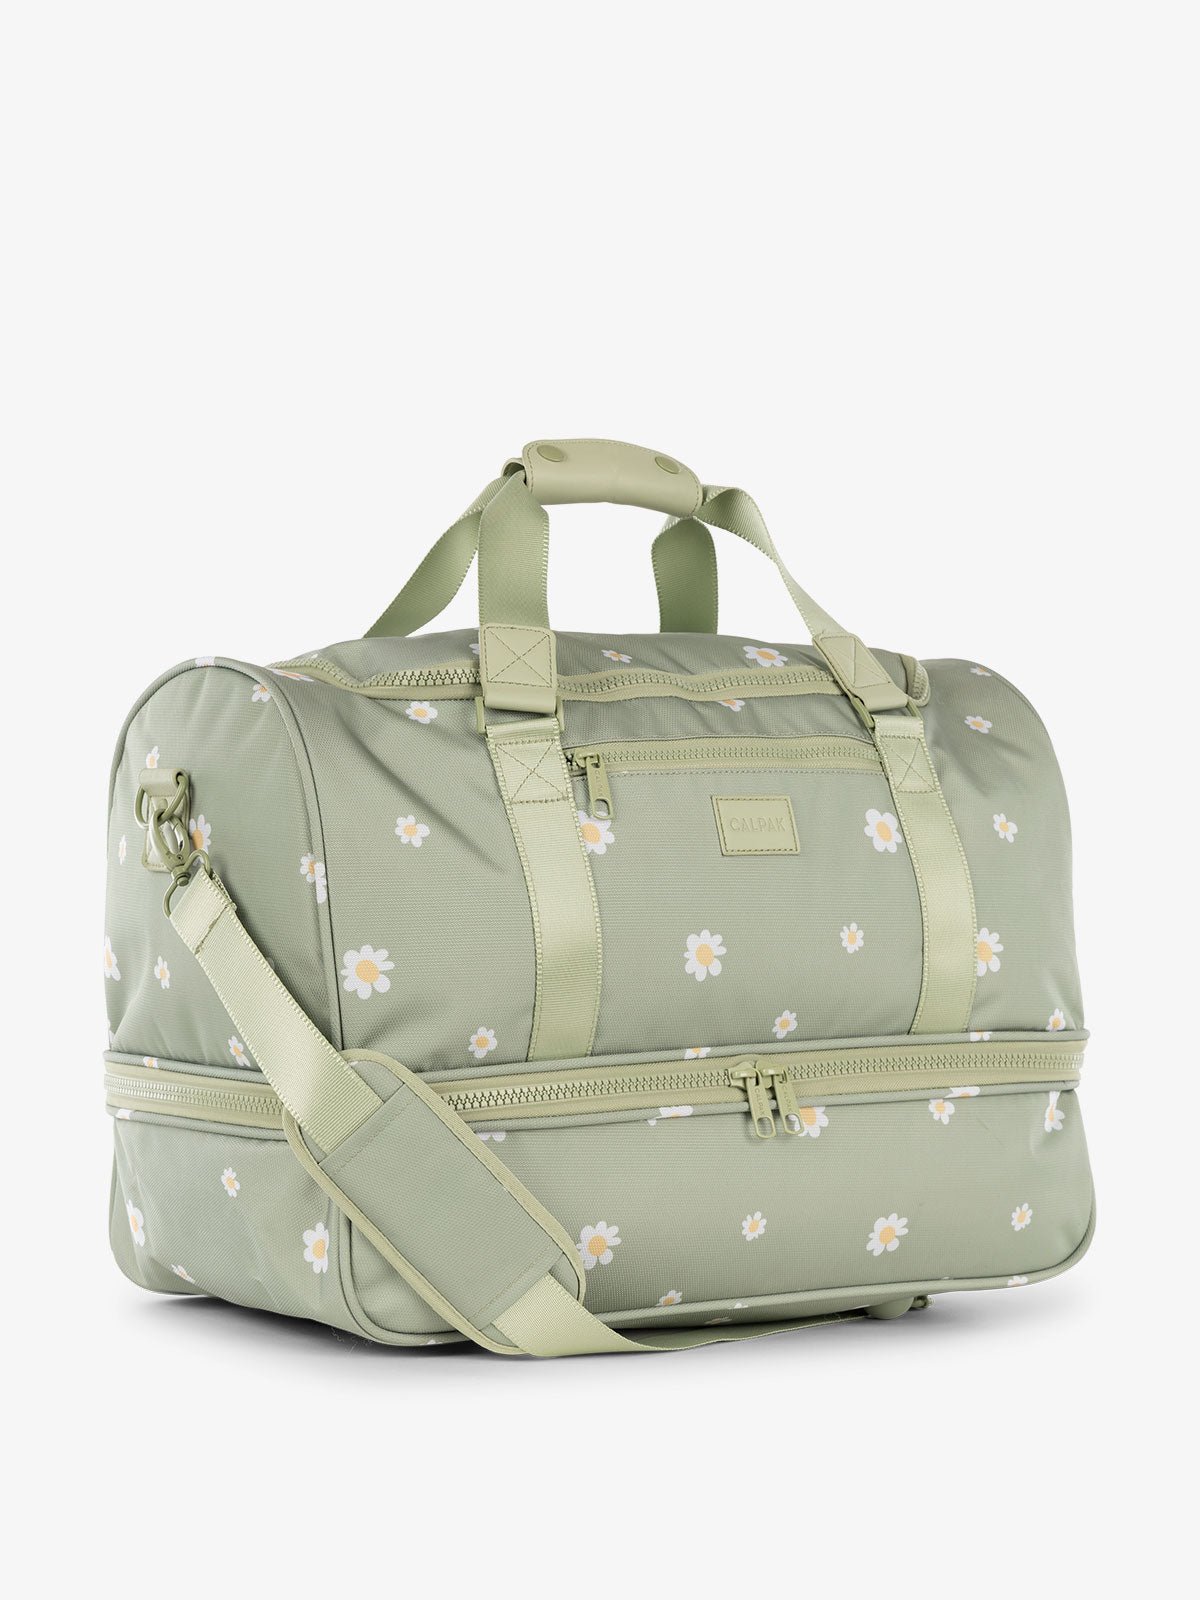 CALPAK Stevyn Duffel bag with removeable padded crossbody strap in daisy green